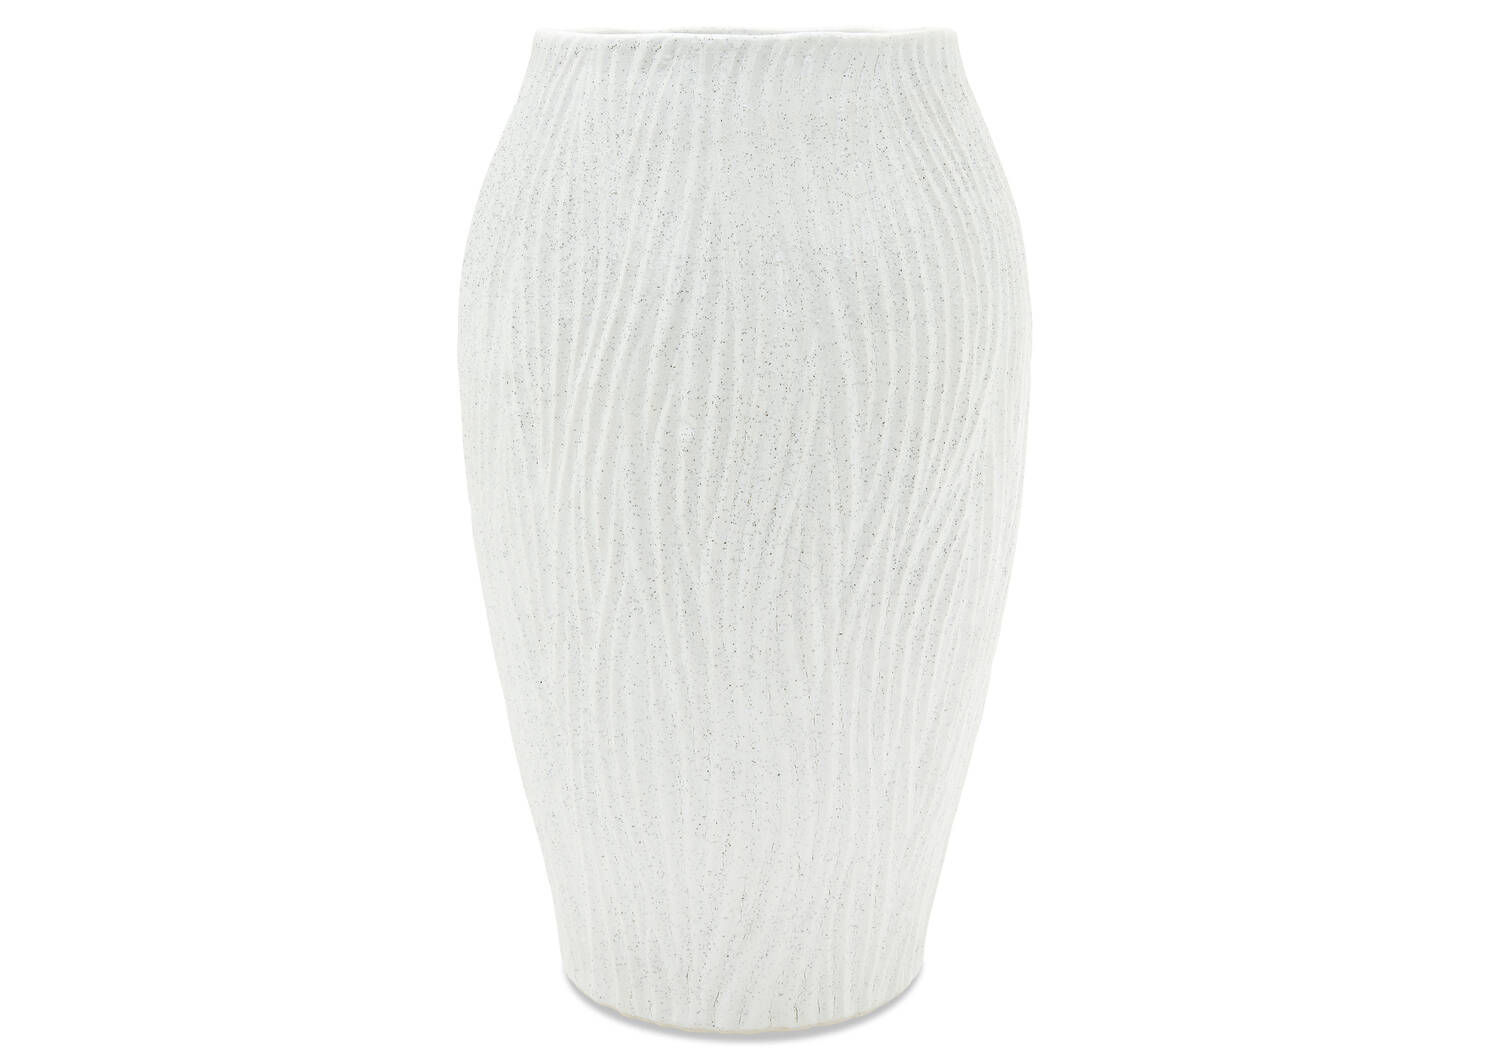 Grand vase Gianna blanc